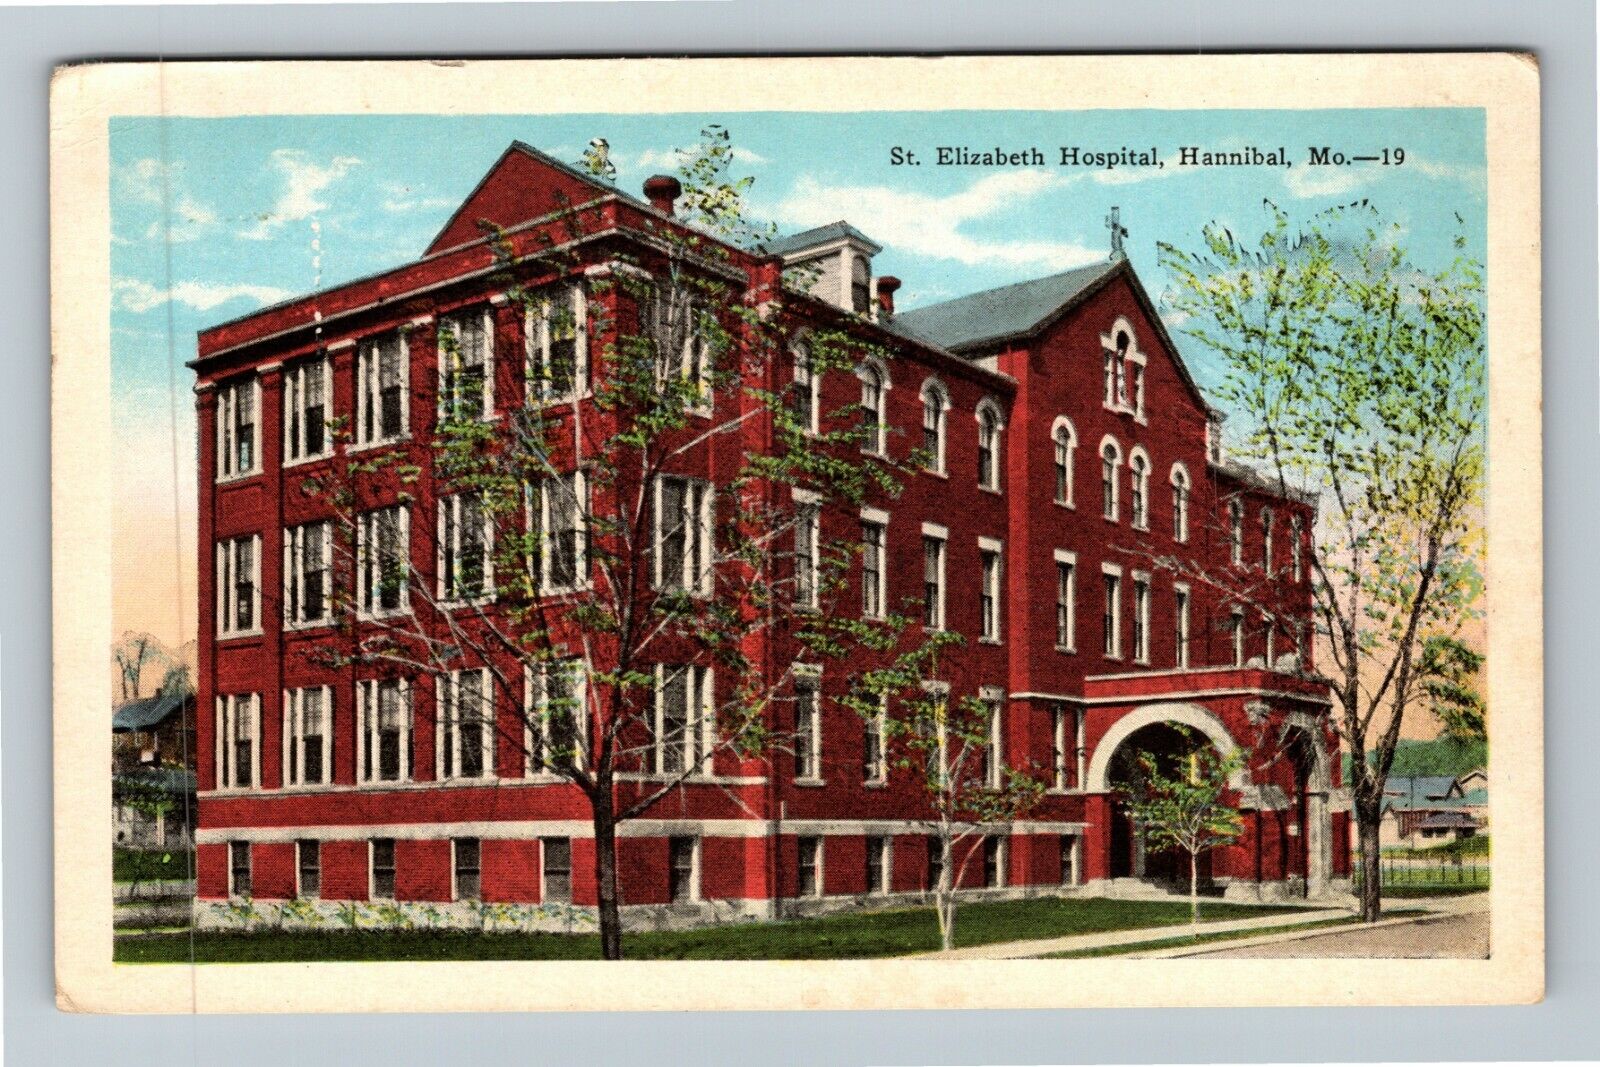 Hannibal MO-Missouri, St. Elizabeth Hospital, Street View Vintage Postcard